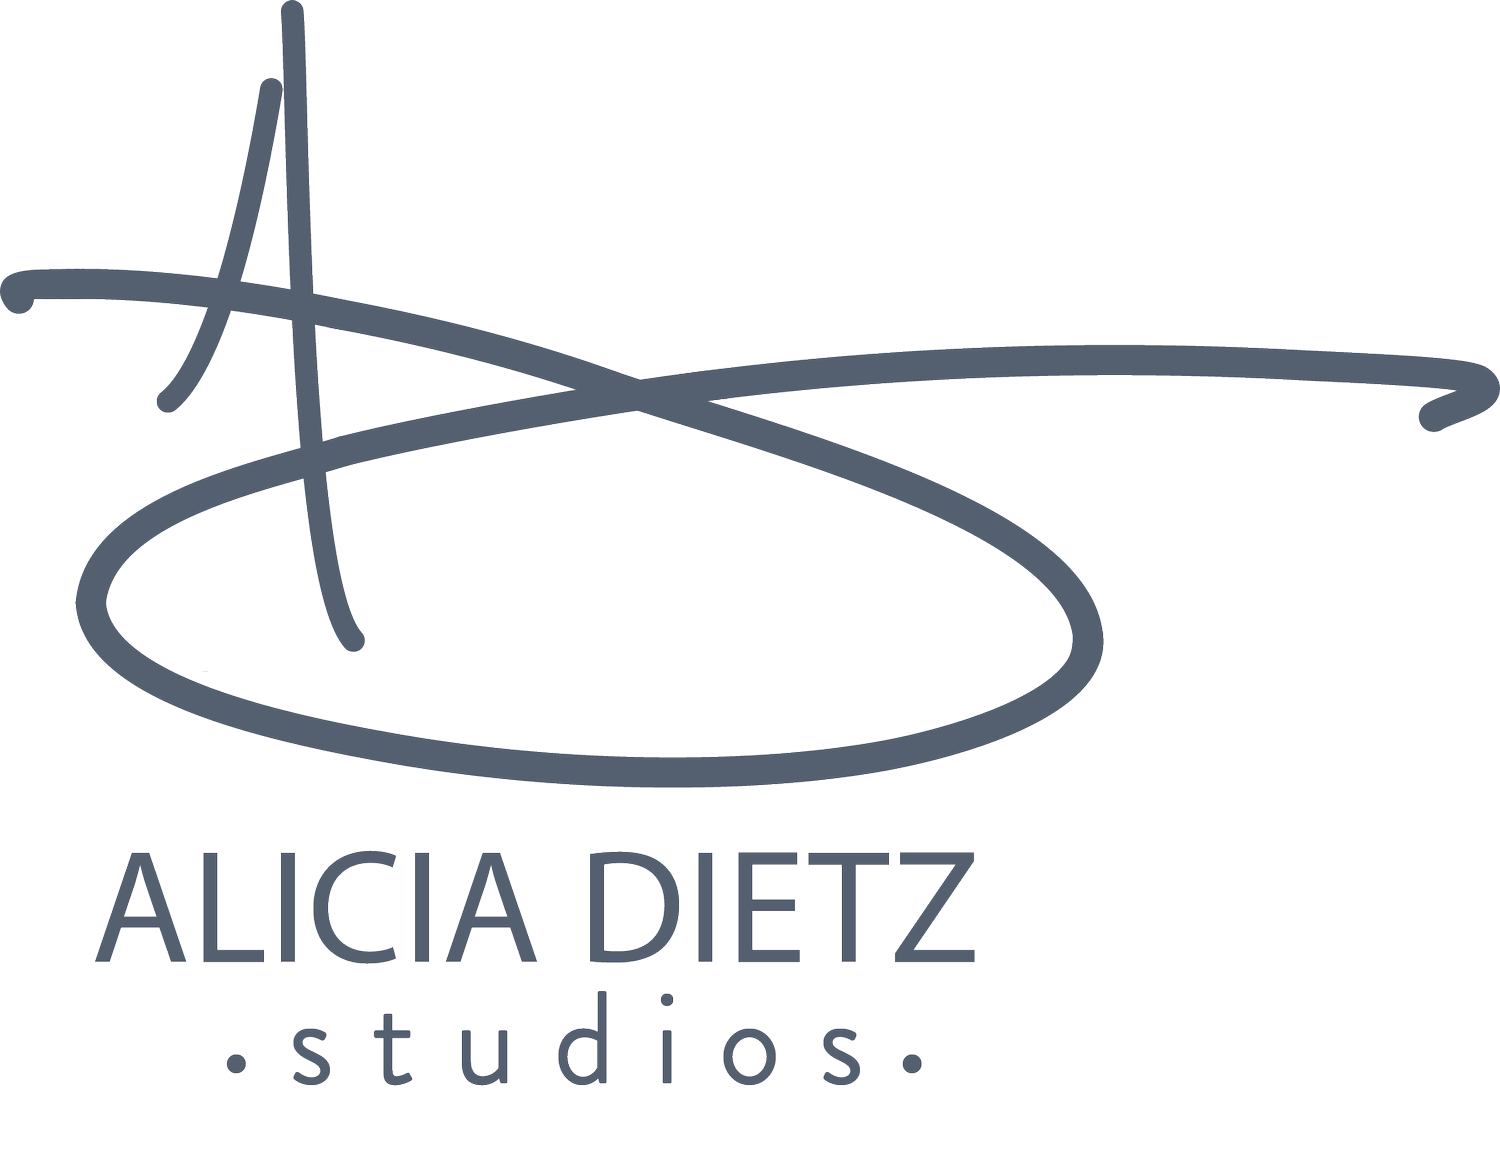 Alicia Dietz Studios